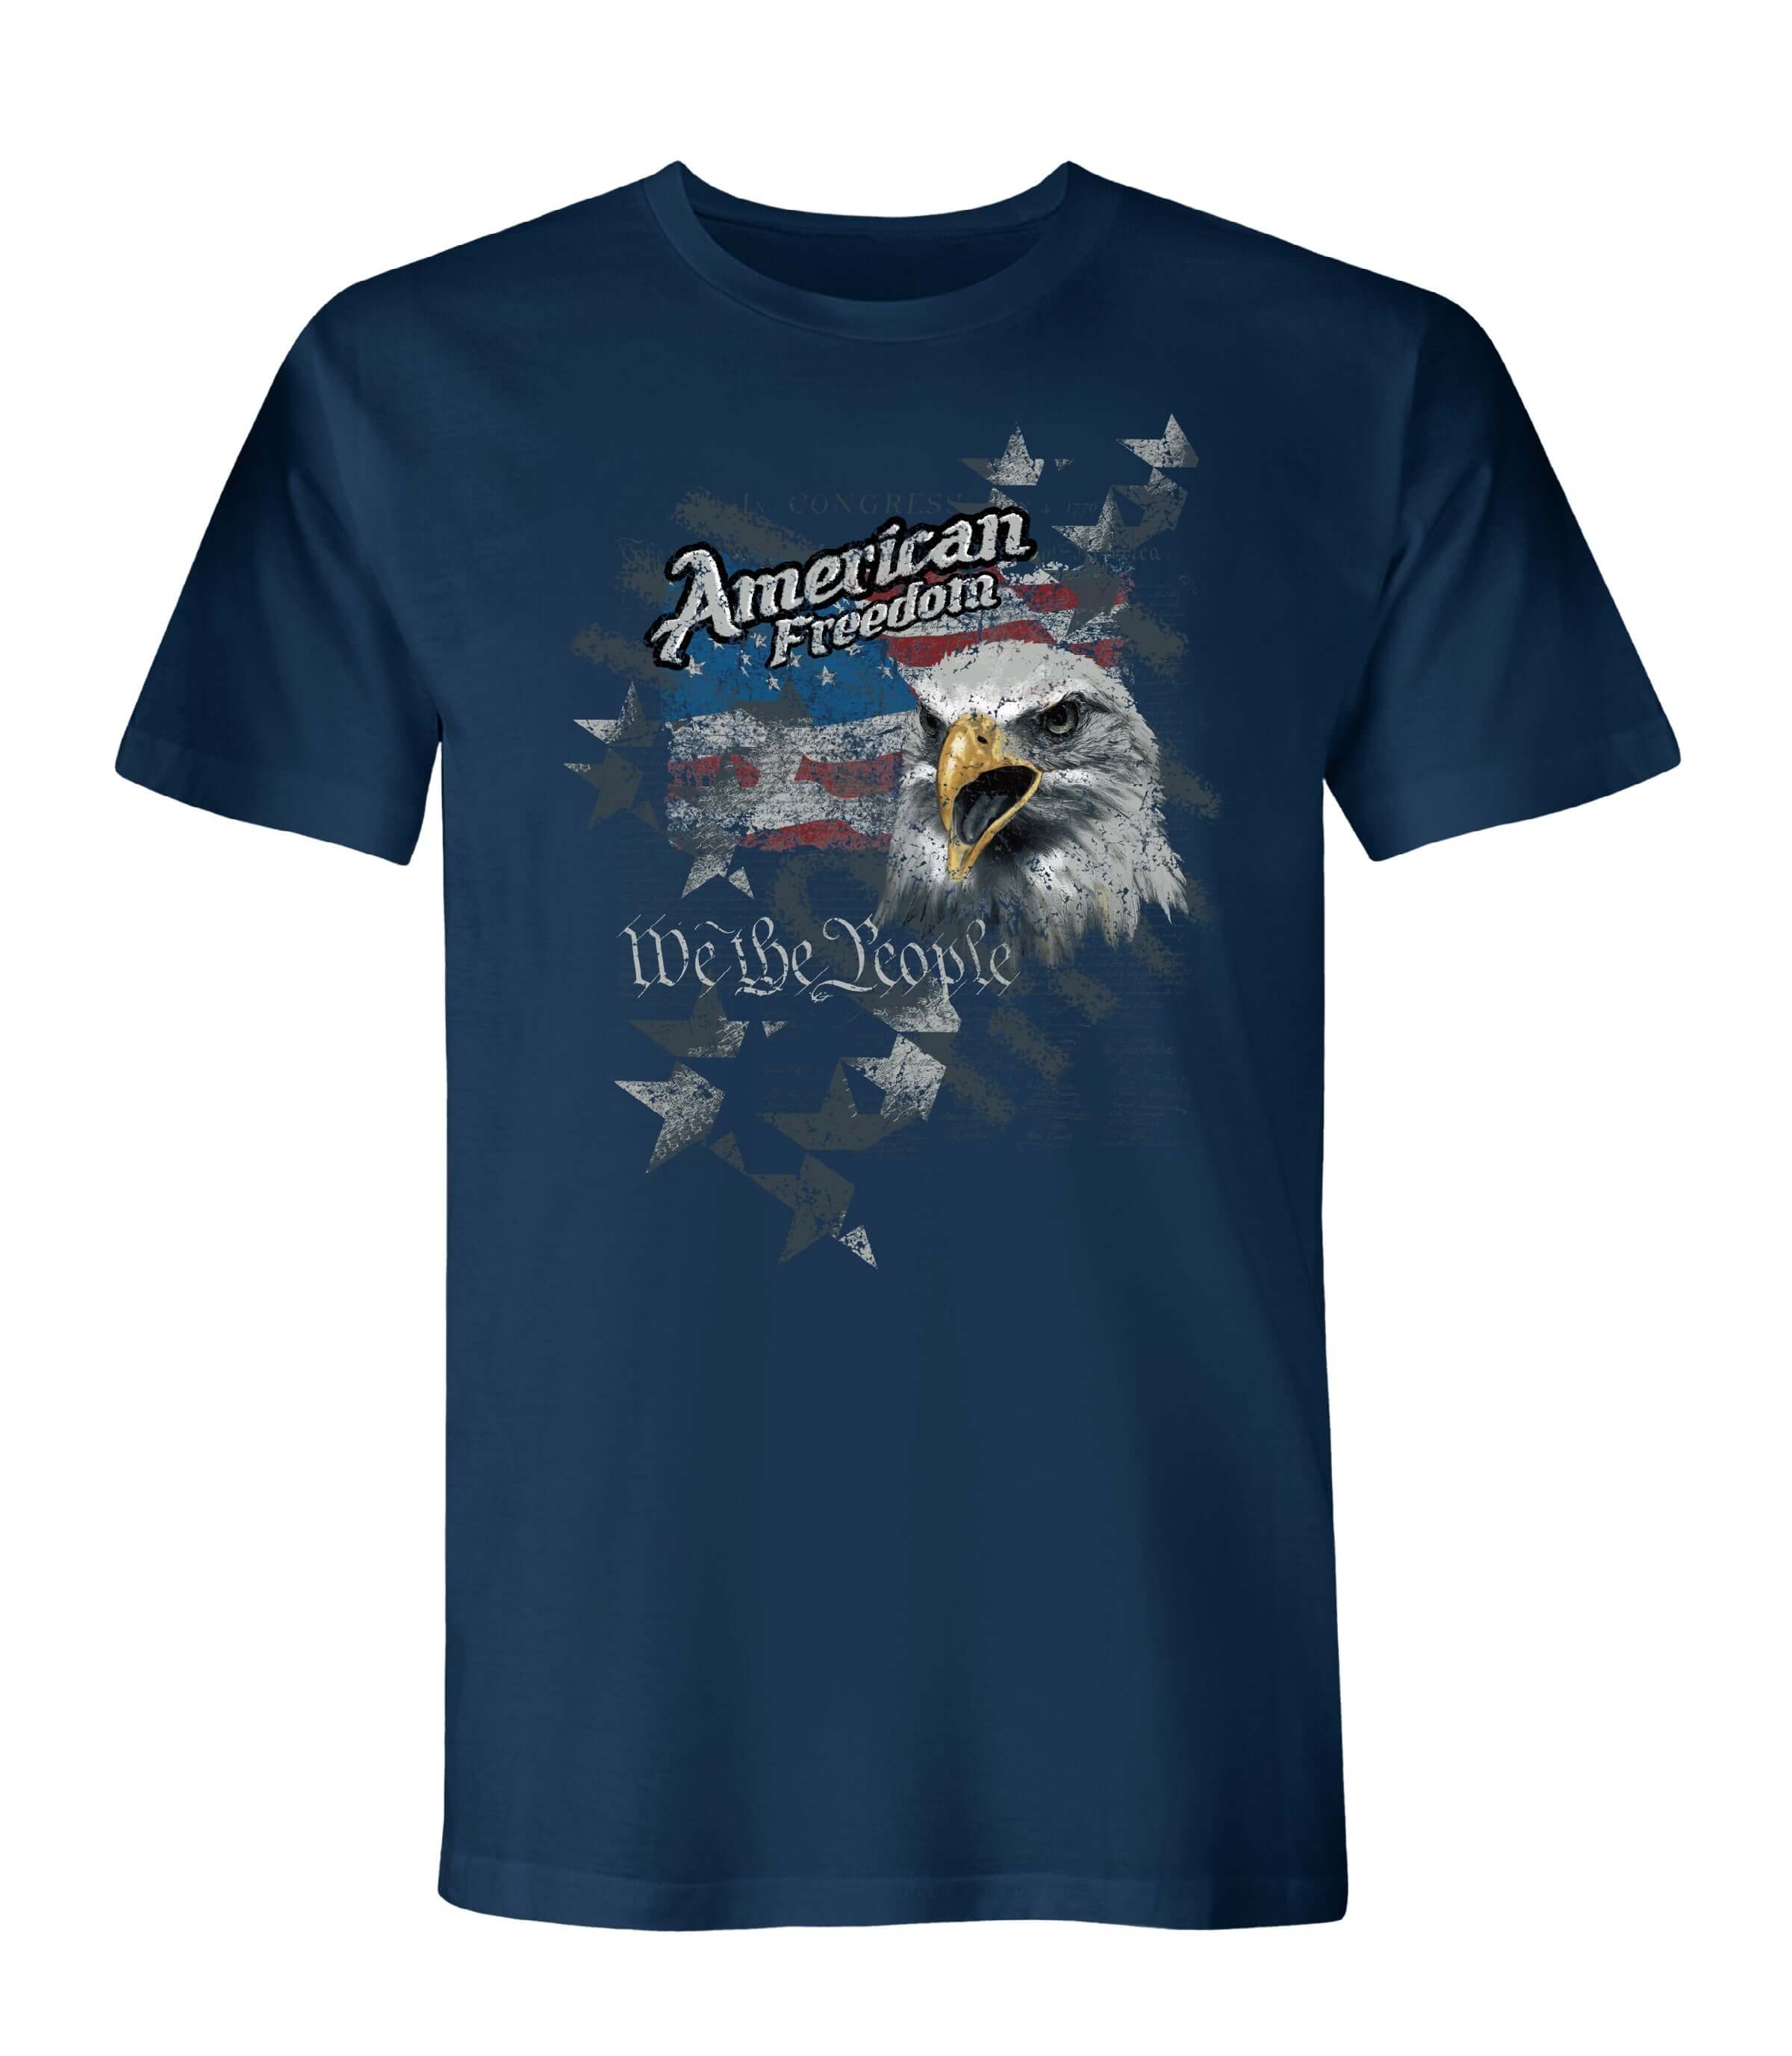 American Freedom Short Sleeve Tee Made In America – The Flag Shirt